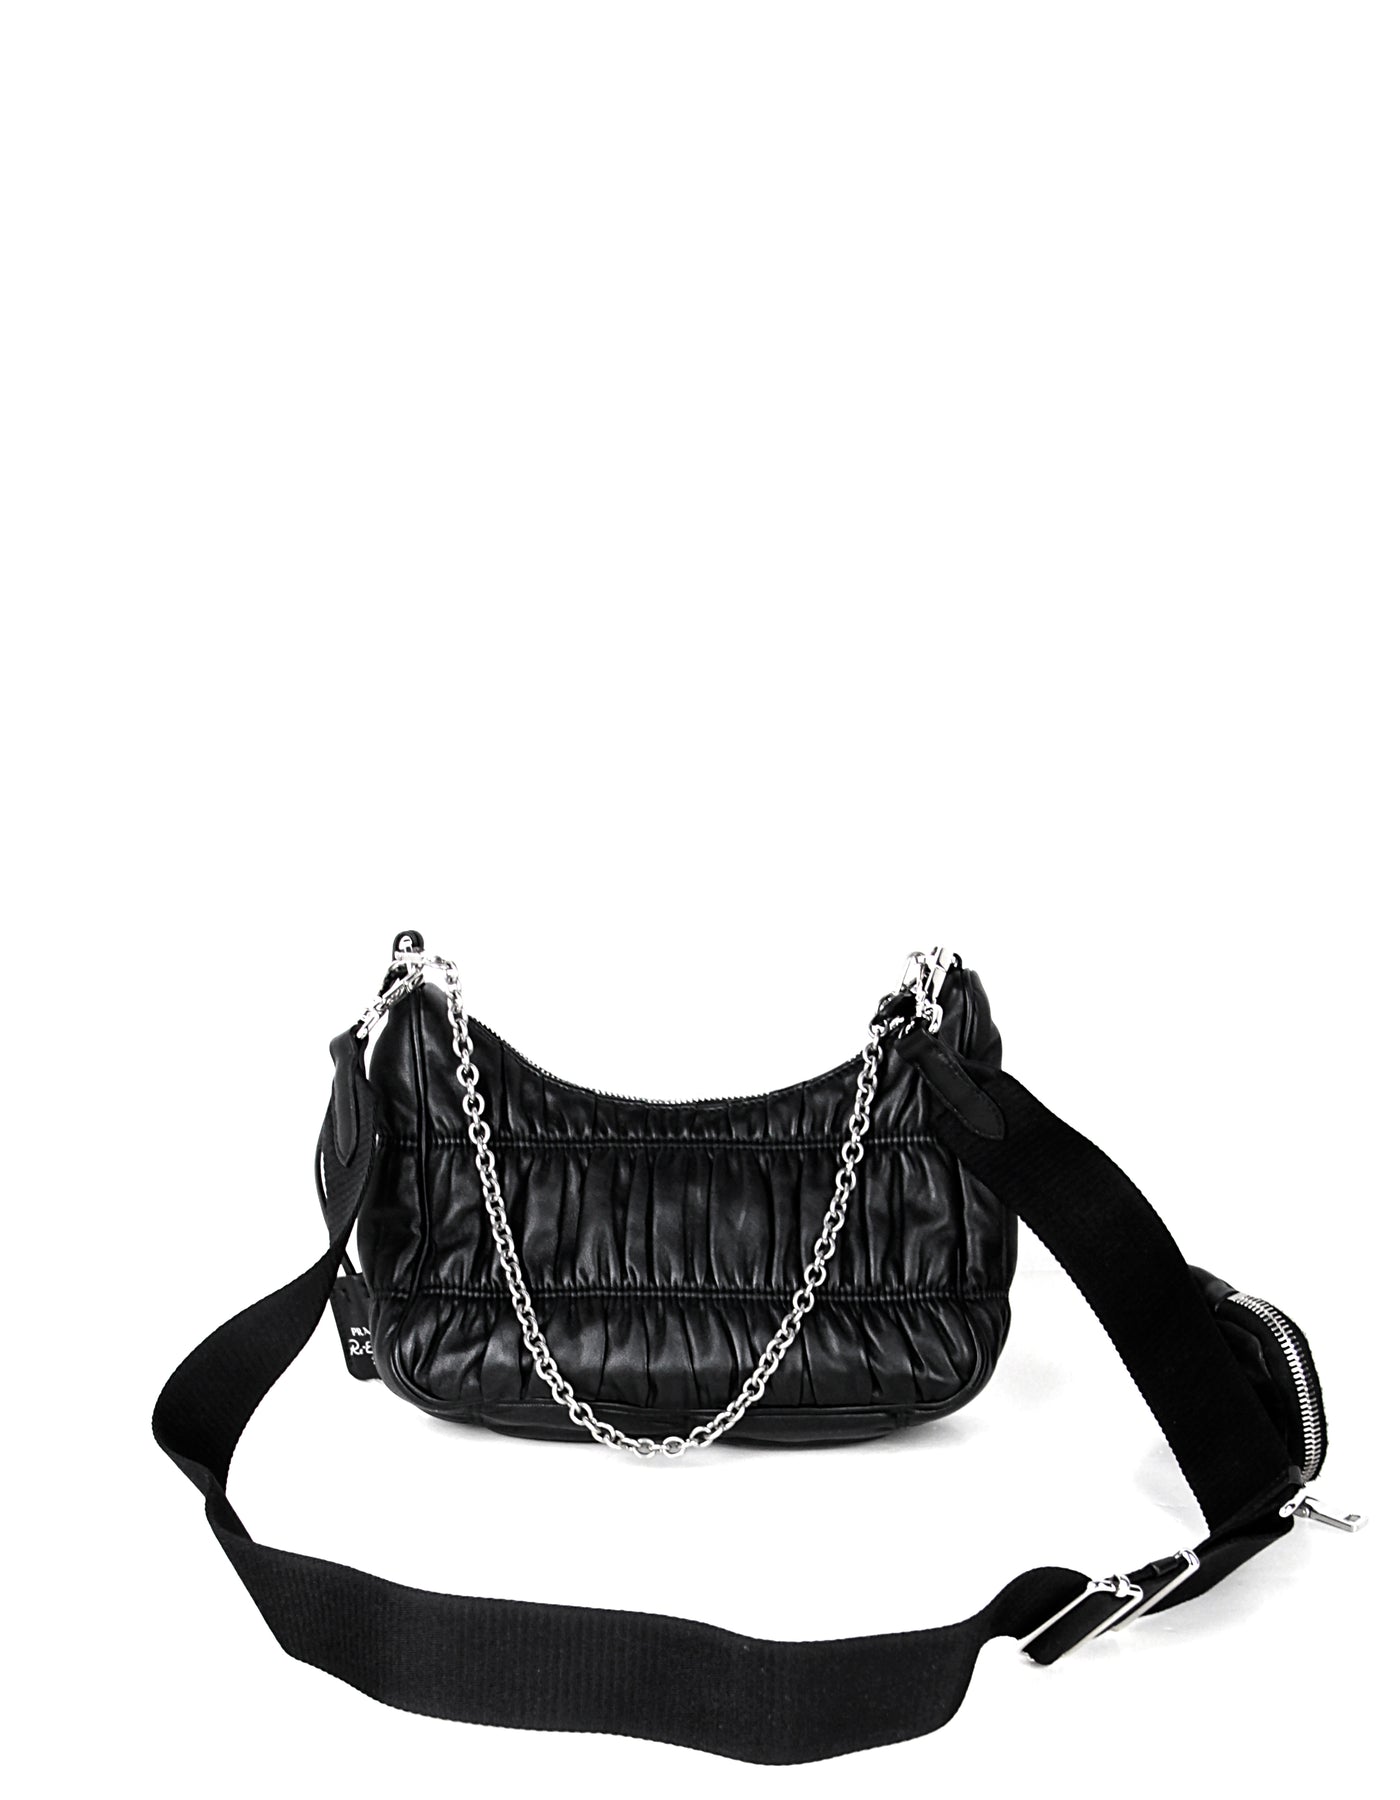 Re-edition 2005 leather handbag Prada Black in Leather - 33002249